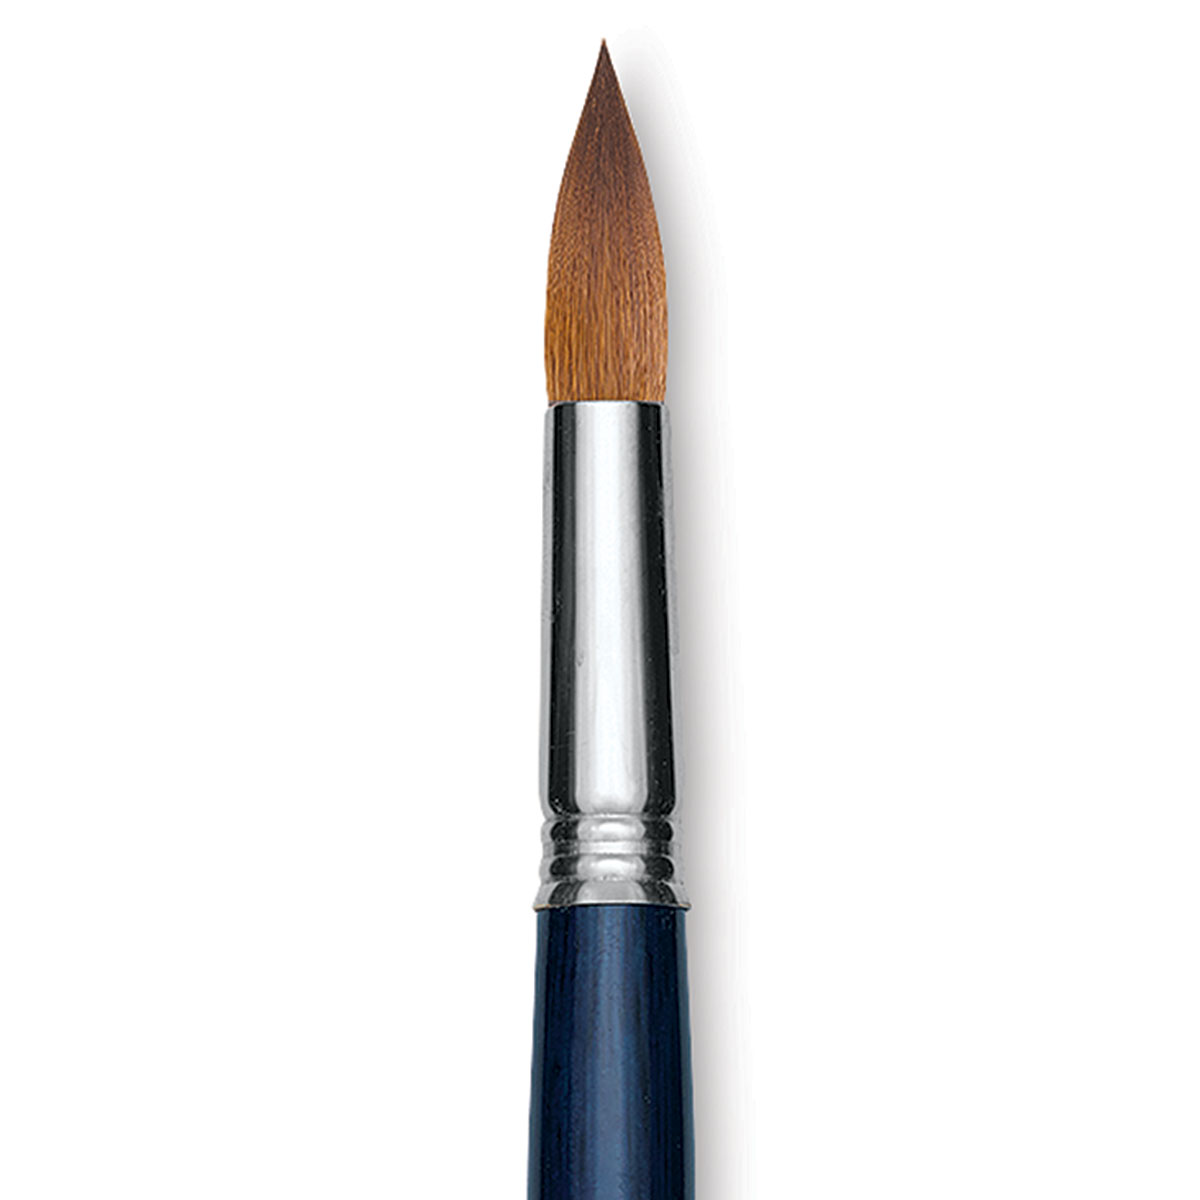 Escoda Optimo Kolinsky Sable Brush - Detailer Round, Short Handle, Size 8, BLICK Art Materials